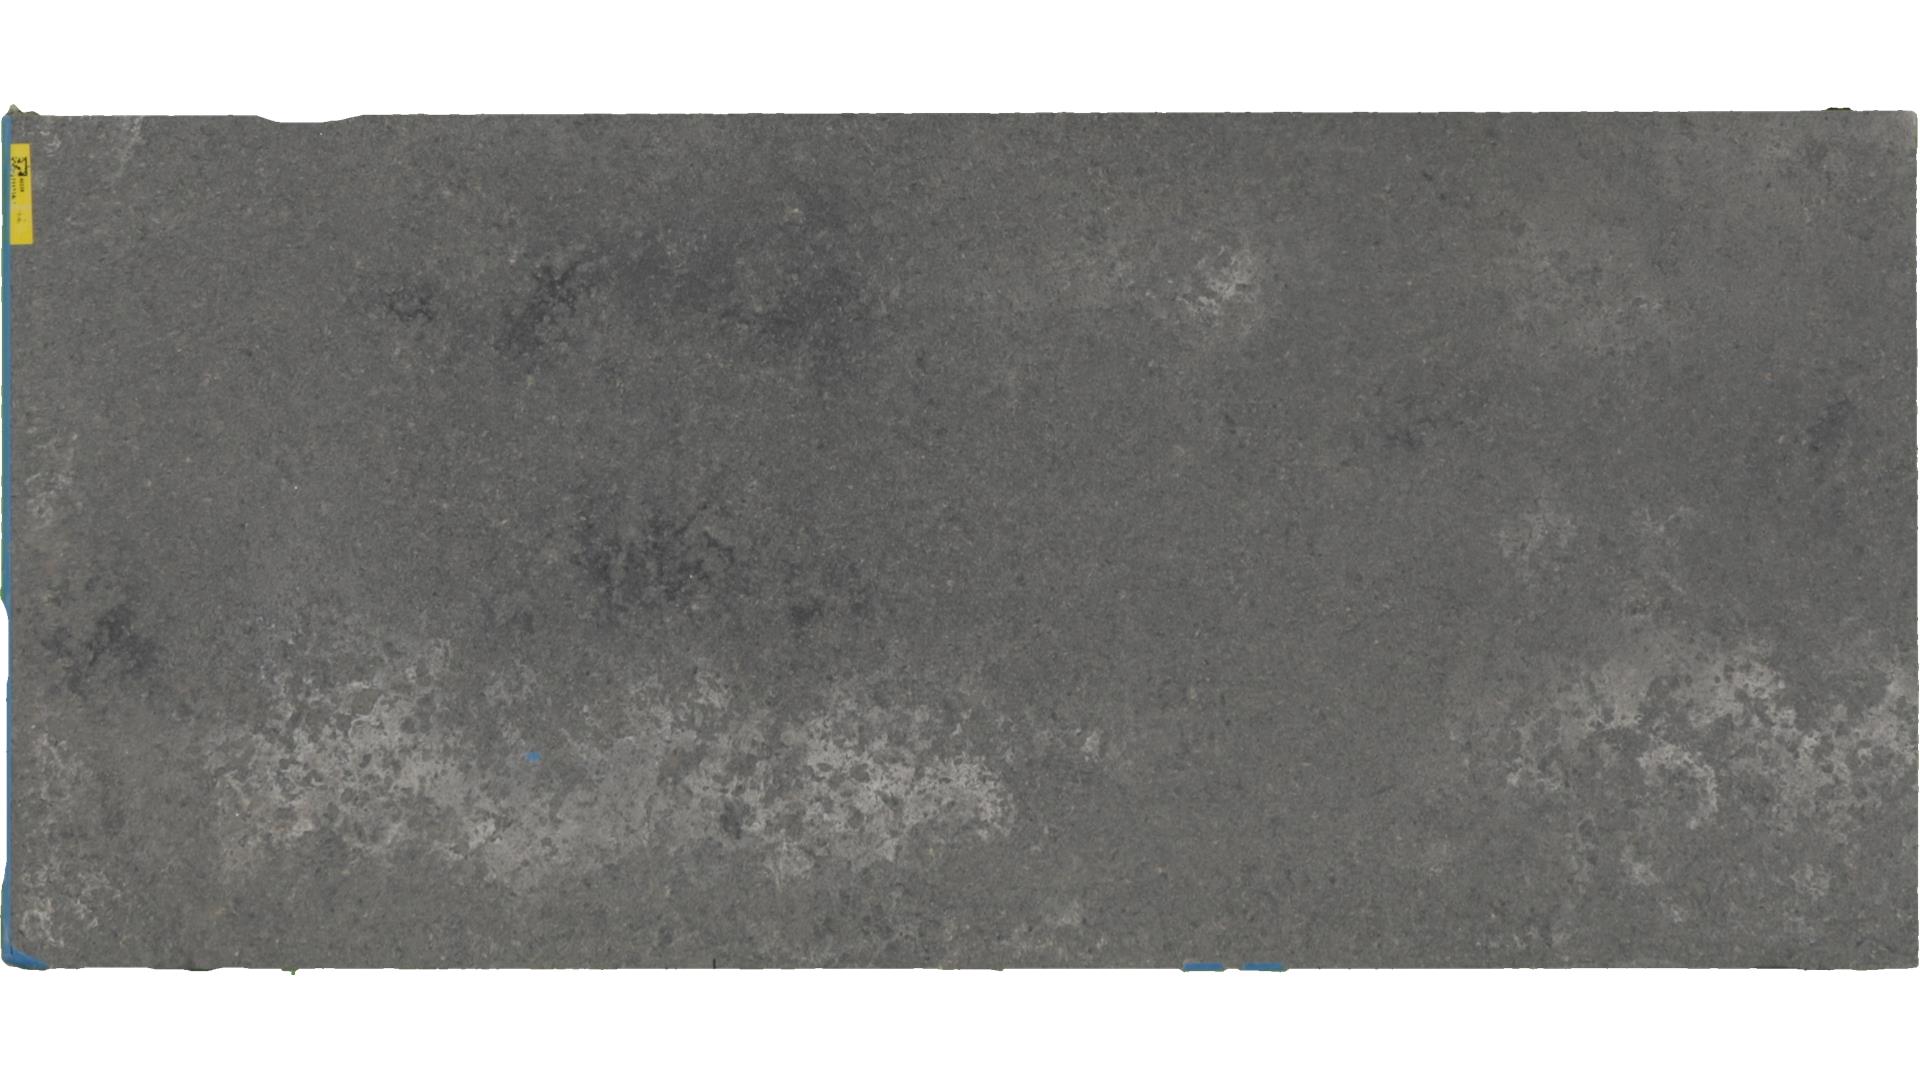 Rugged Concrete Caesarstone Slabs